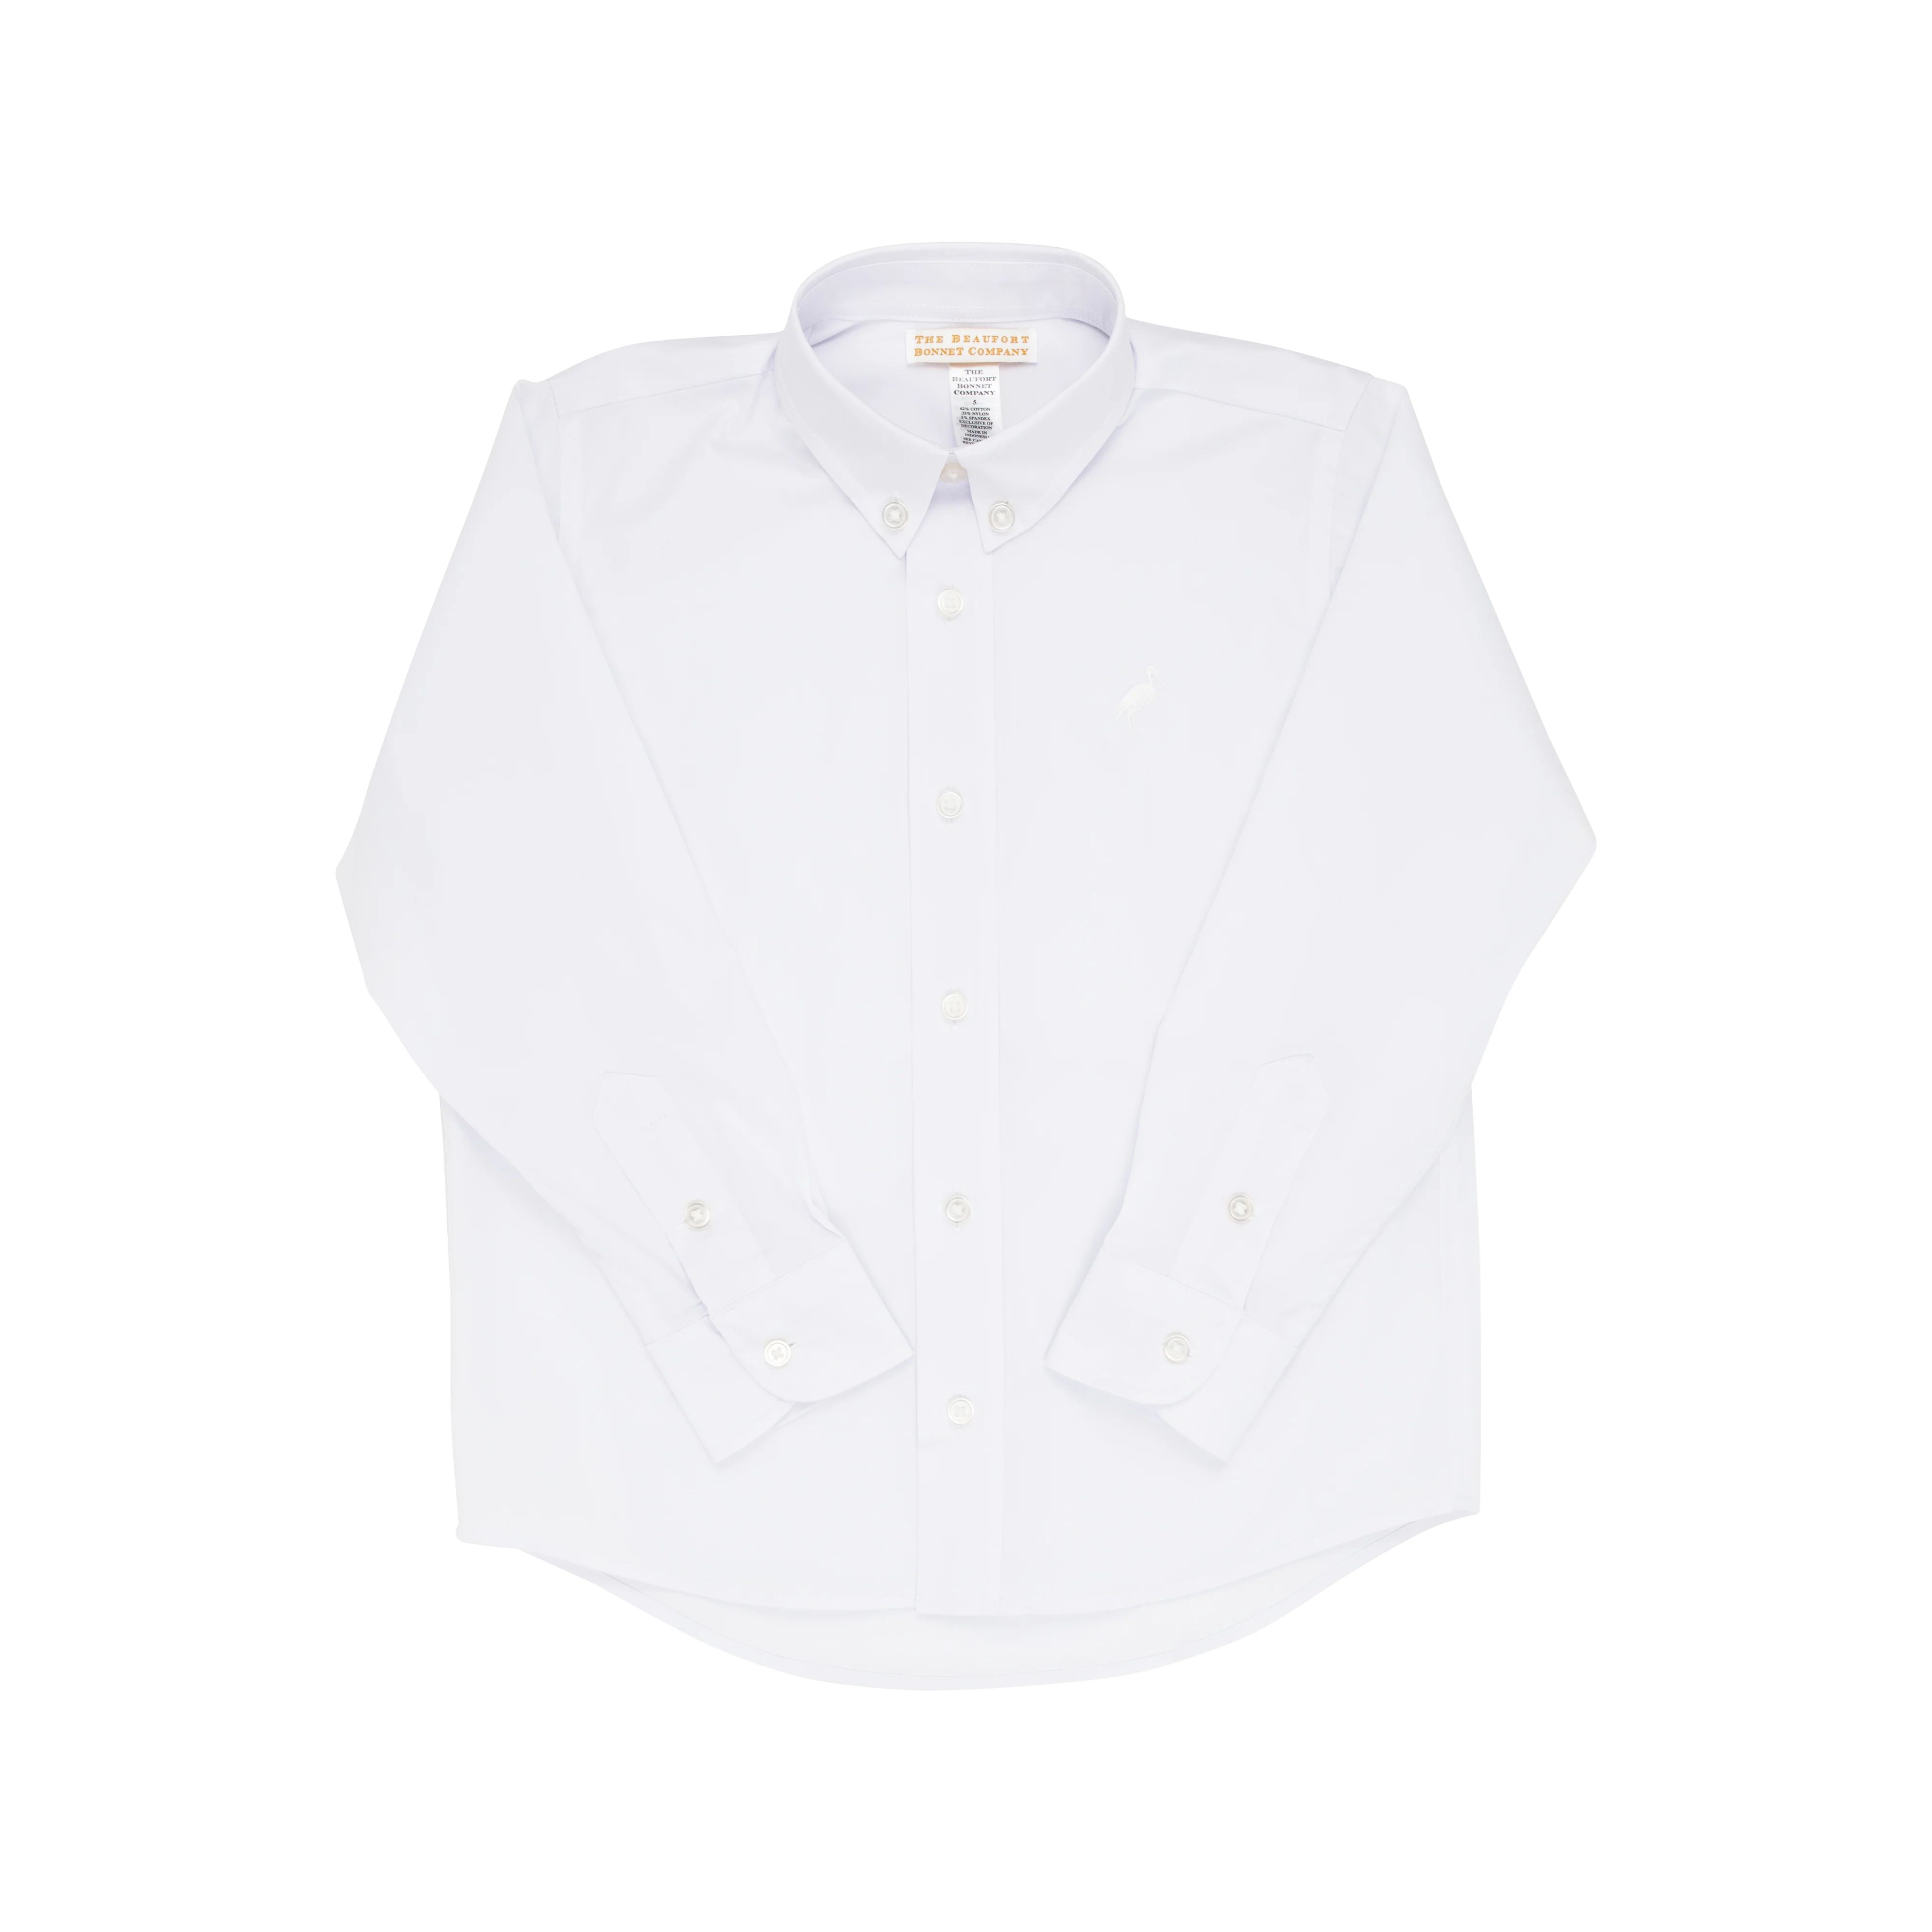 Dean's List Dress Shirt (Oxford) - Worth Avenue White with Worth Avenue White Stork | The Beaufort Bonnet Company